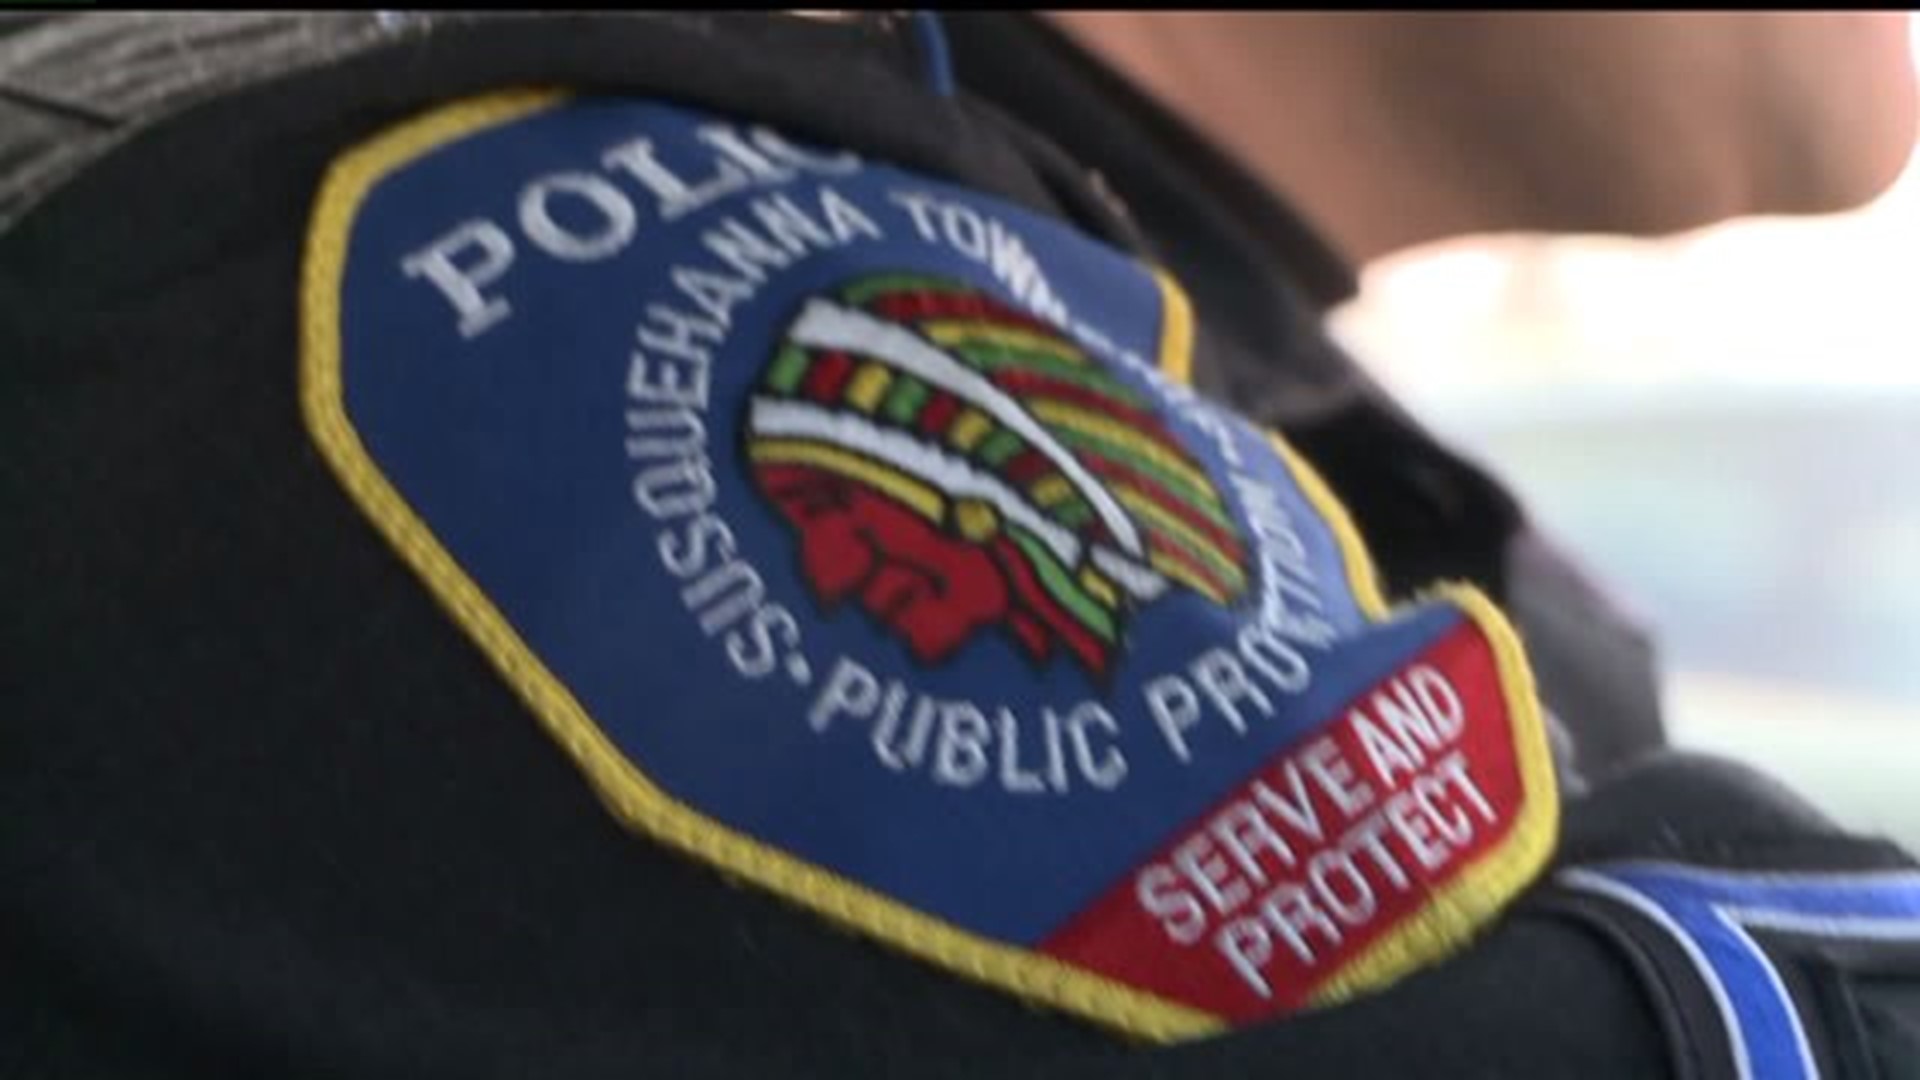 After recent assaults, Susquehanna Twp. police `vigilant` to help community